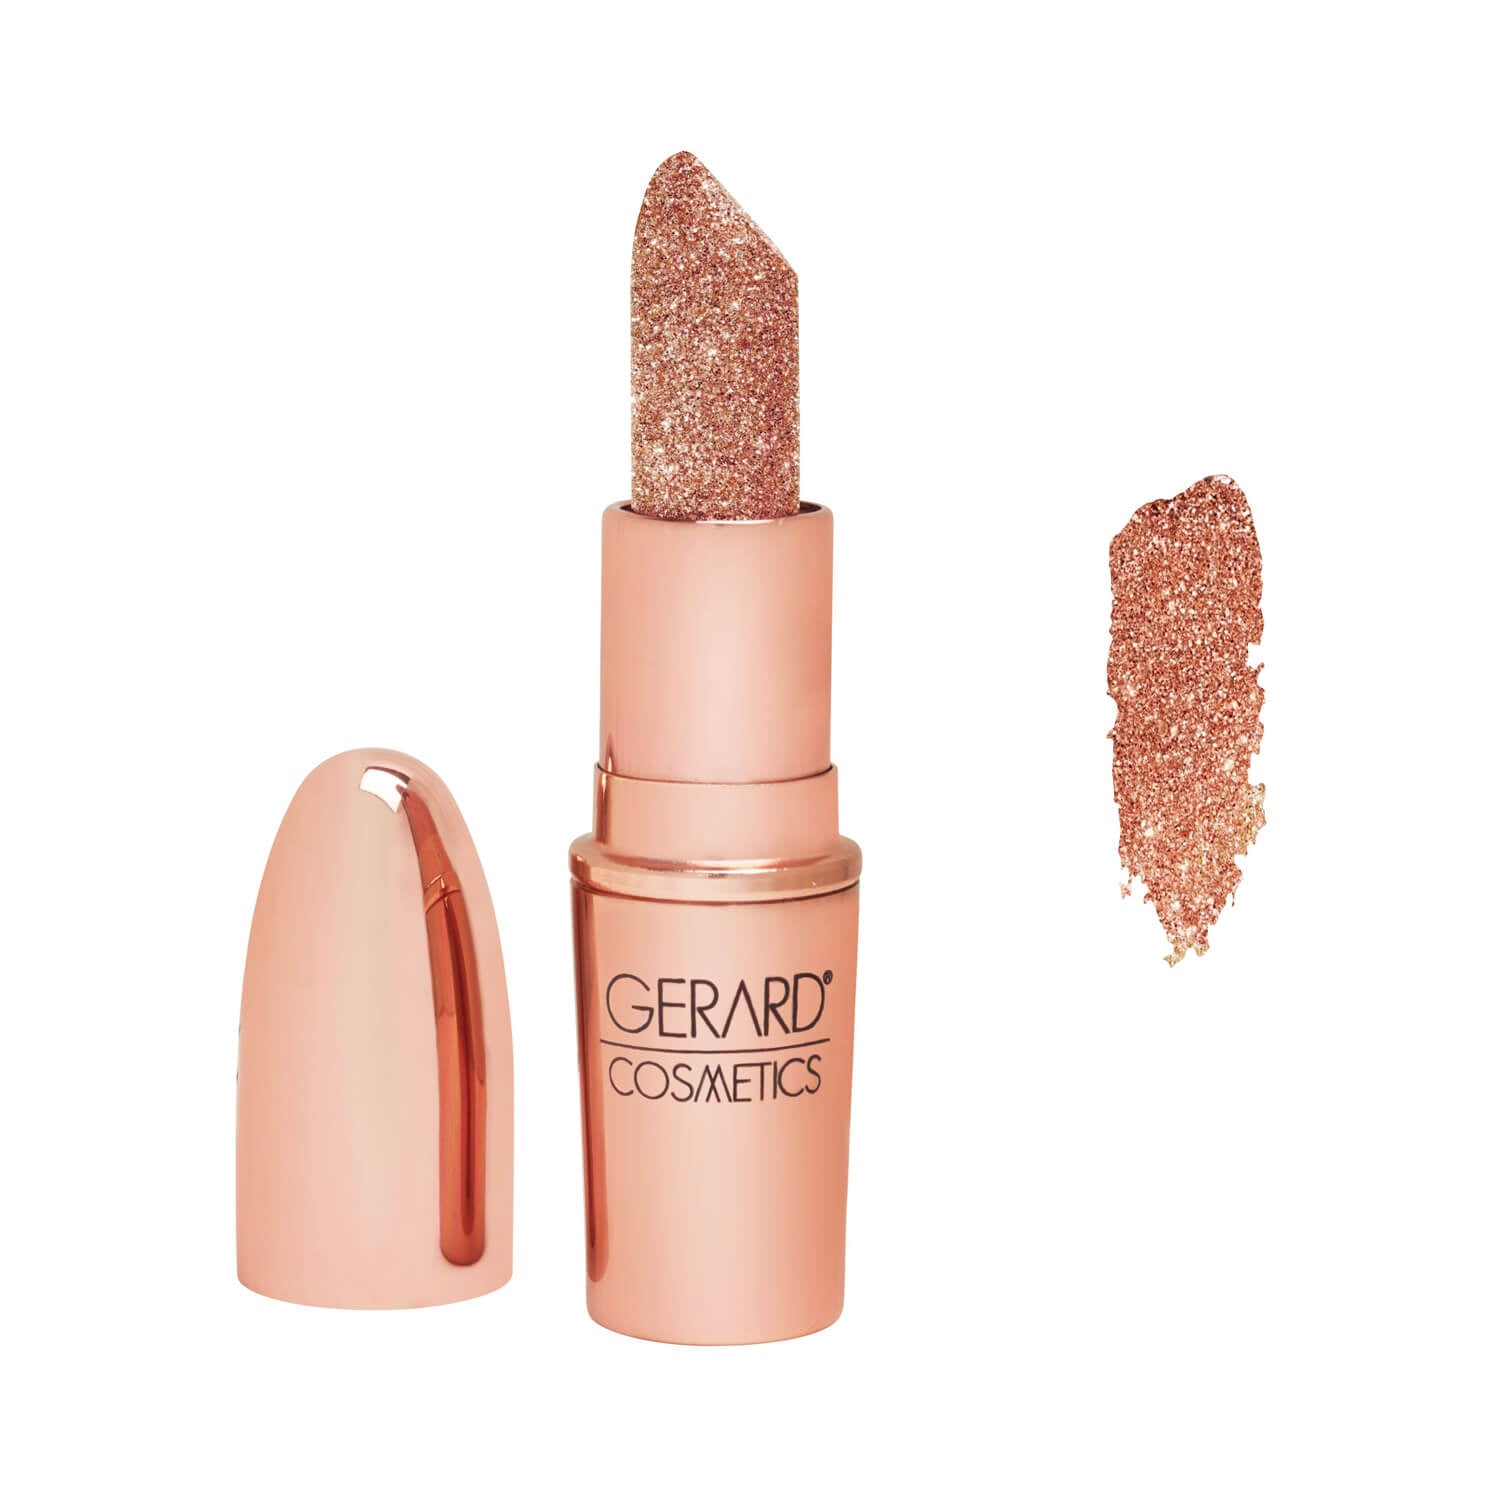 Gerard Cosmetics Glitter Lipstick hollywood Blvd